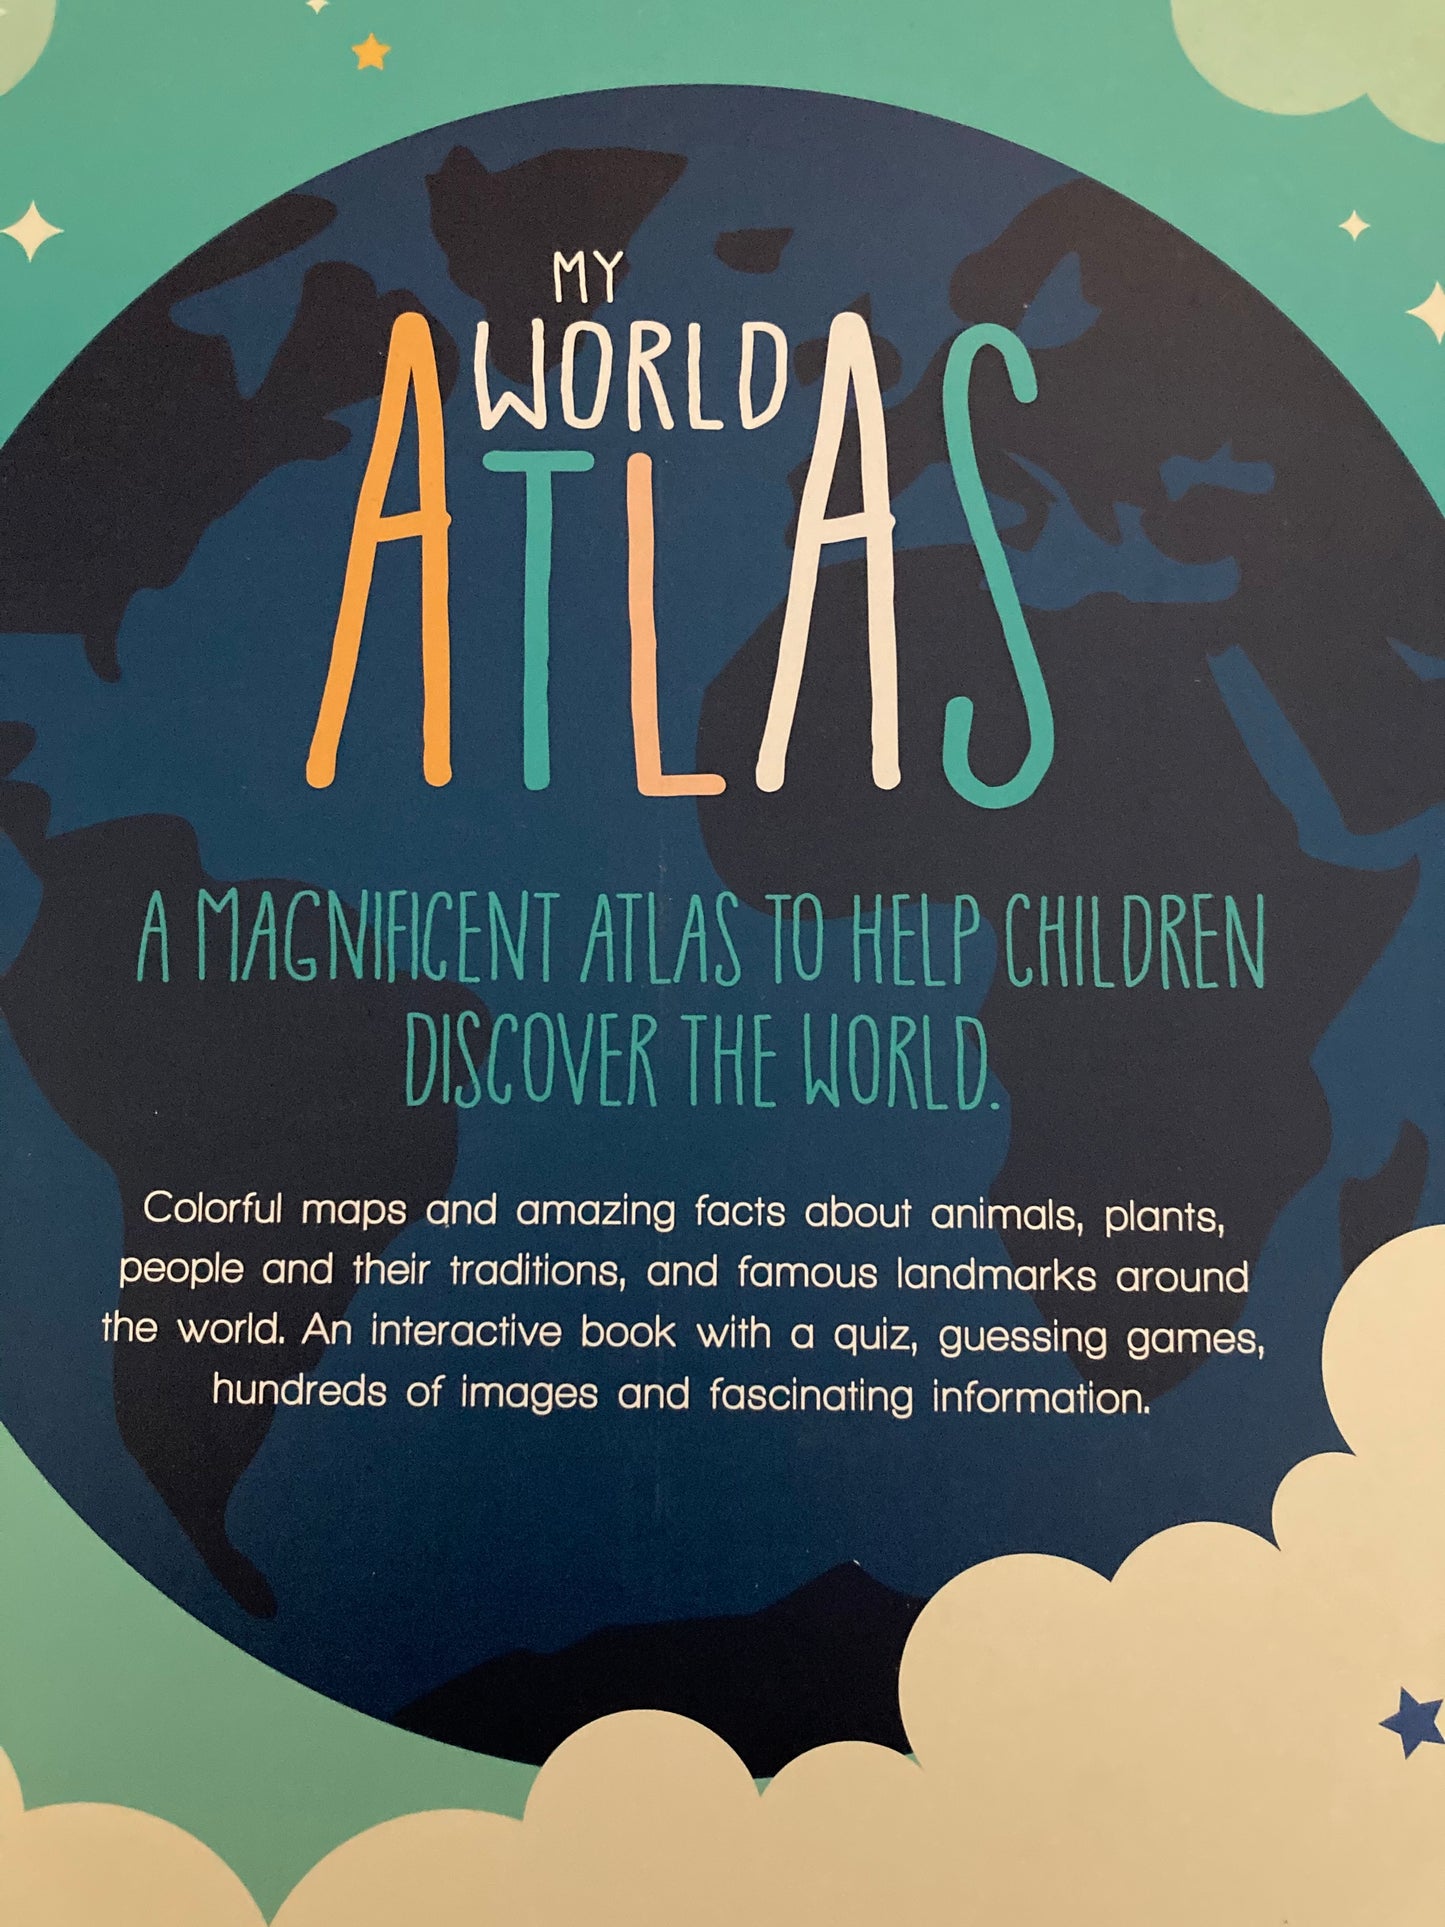 Educational Book - MY WORLD ATLAS